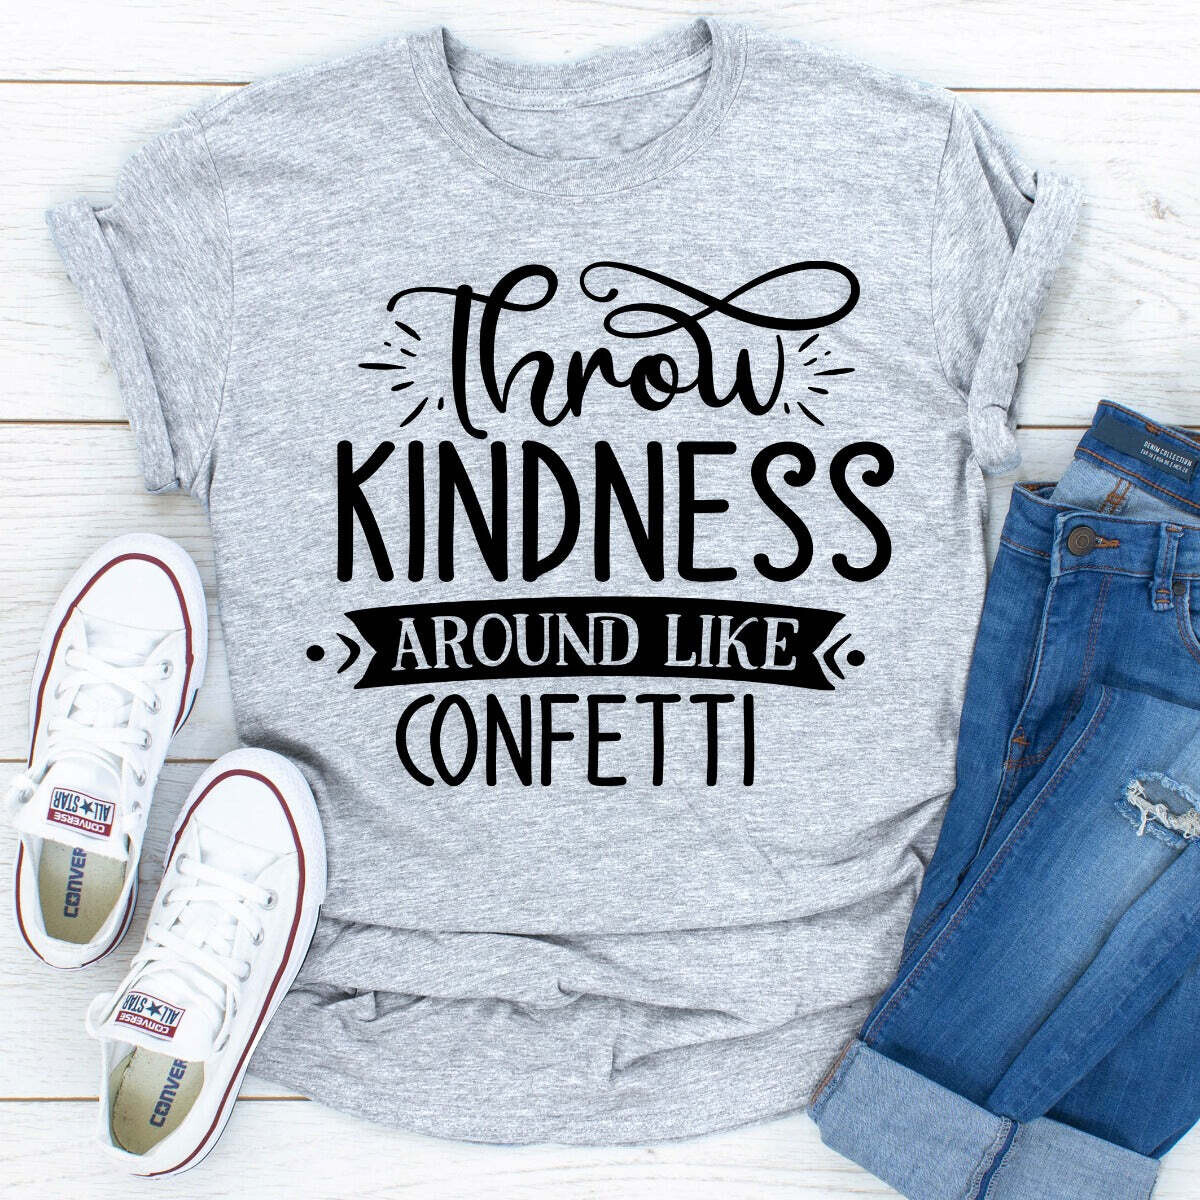 Throw Kindness Around Like Confetti T-Shirt